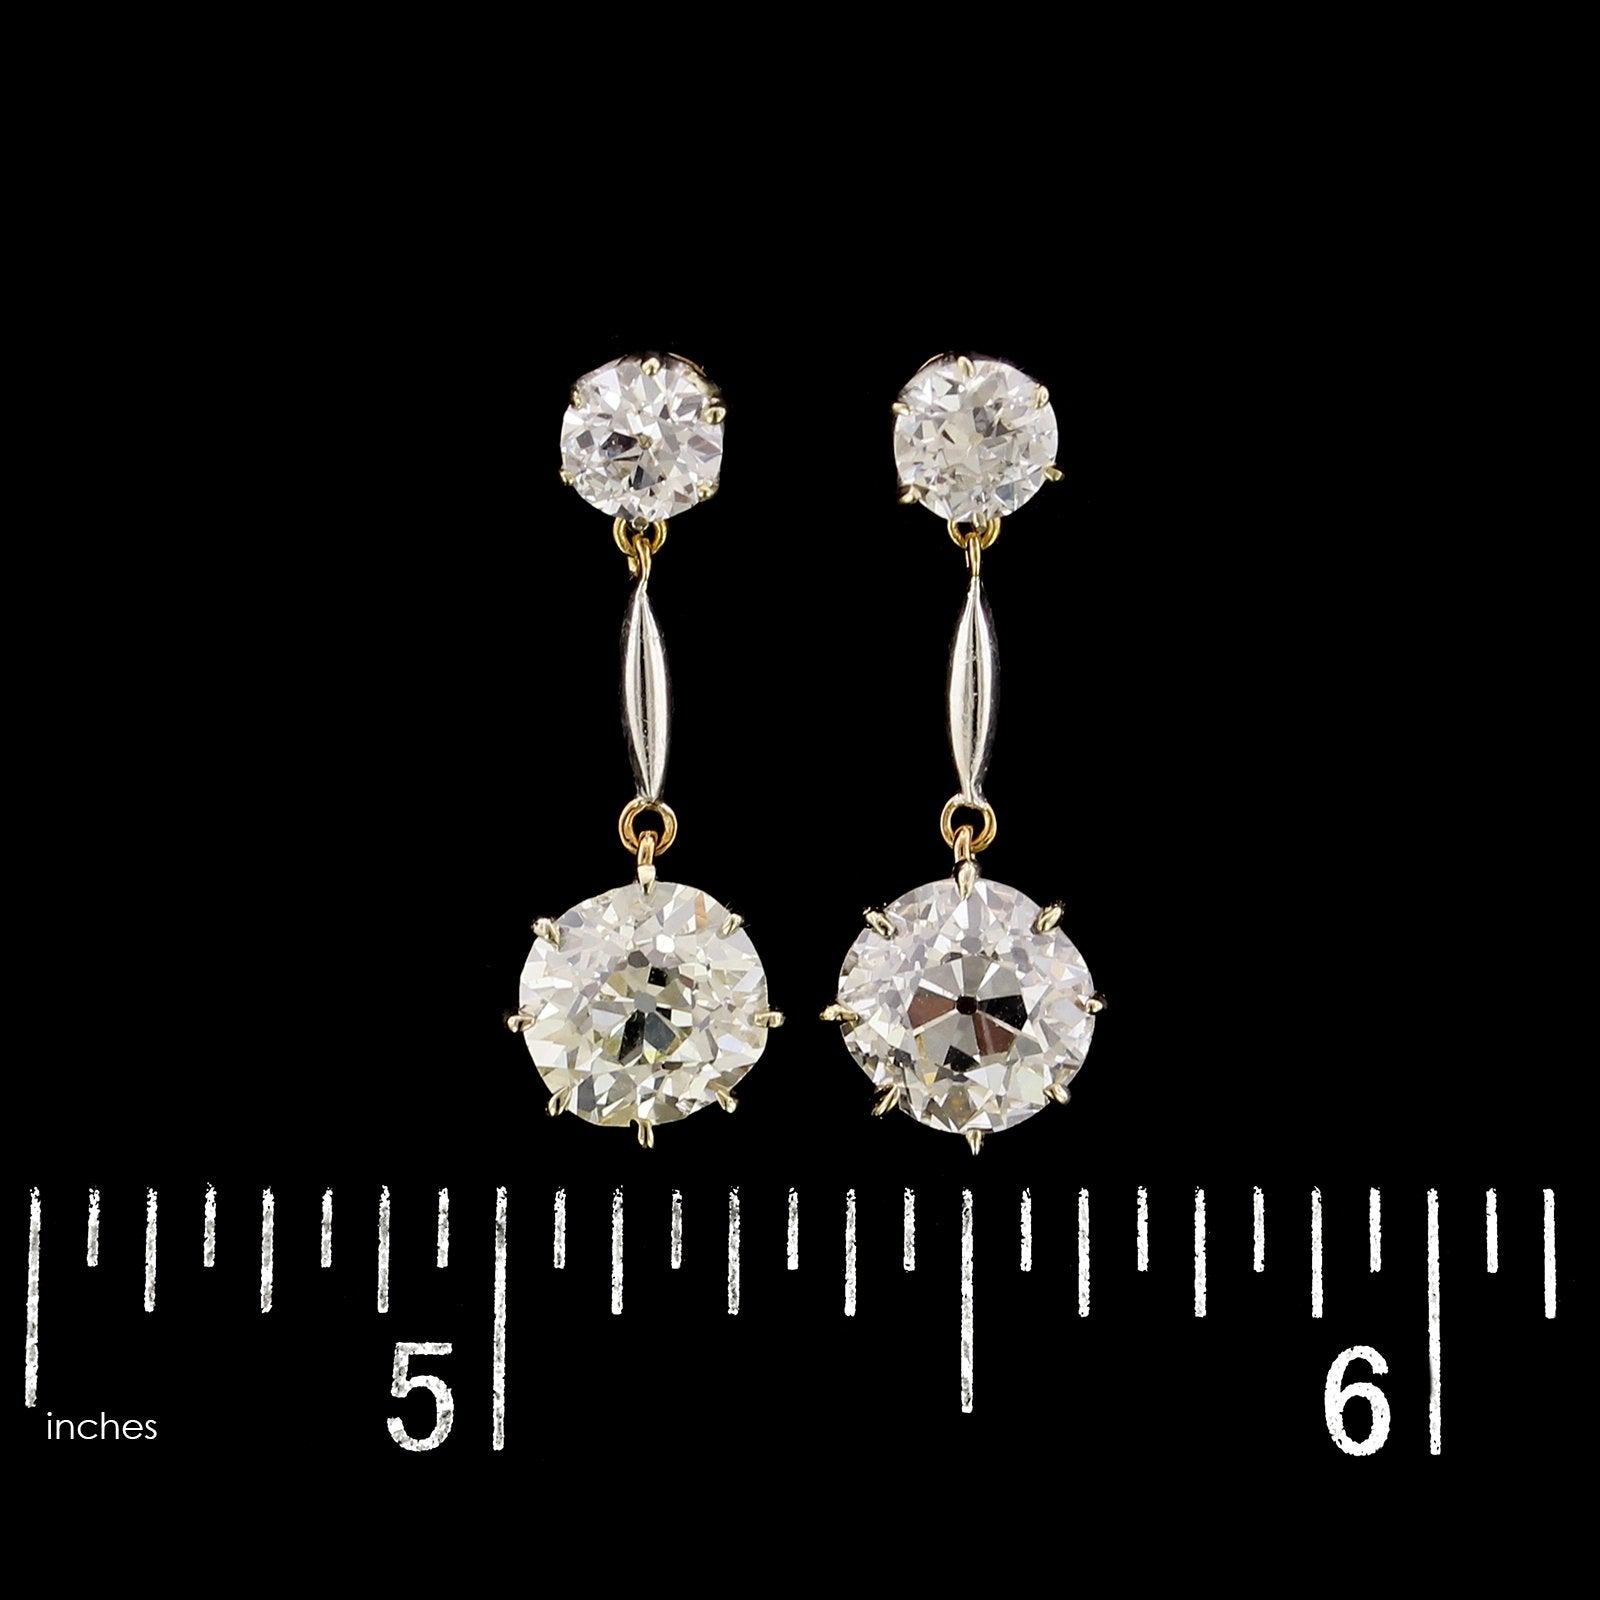 Antique 18K Yellow Gold Estate Diamond Earrings